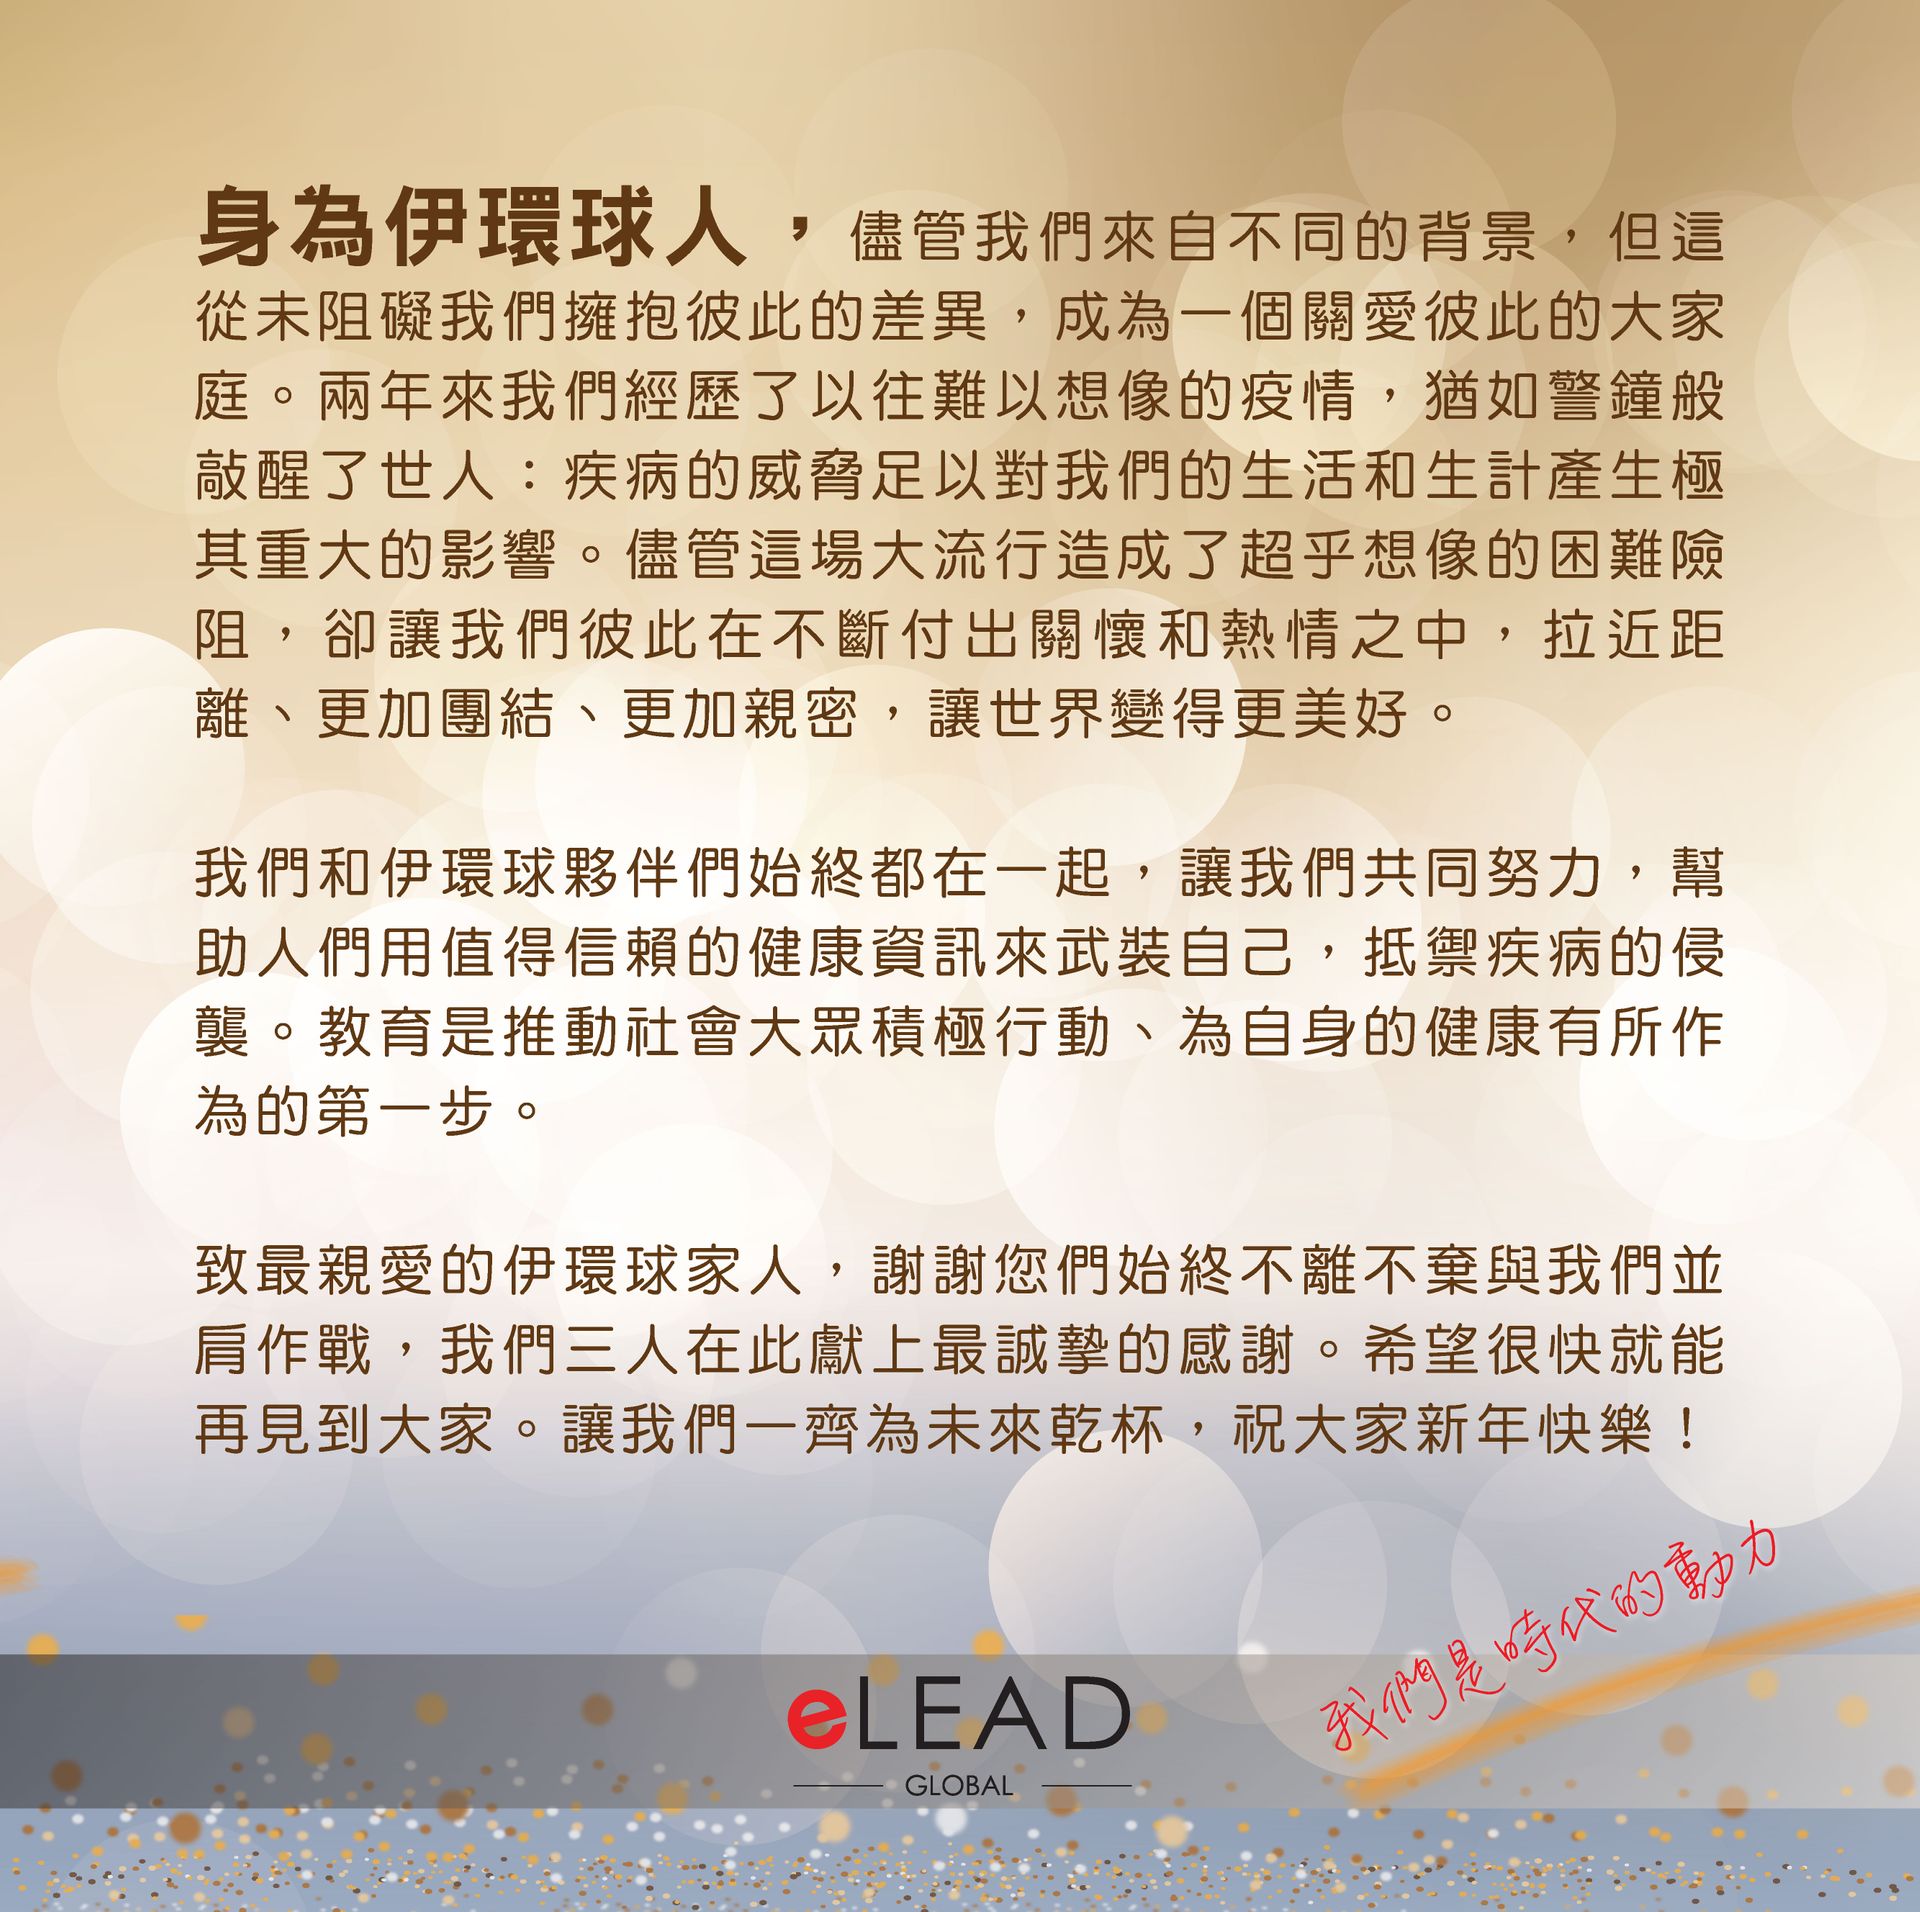 eLead business partner